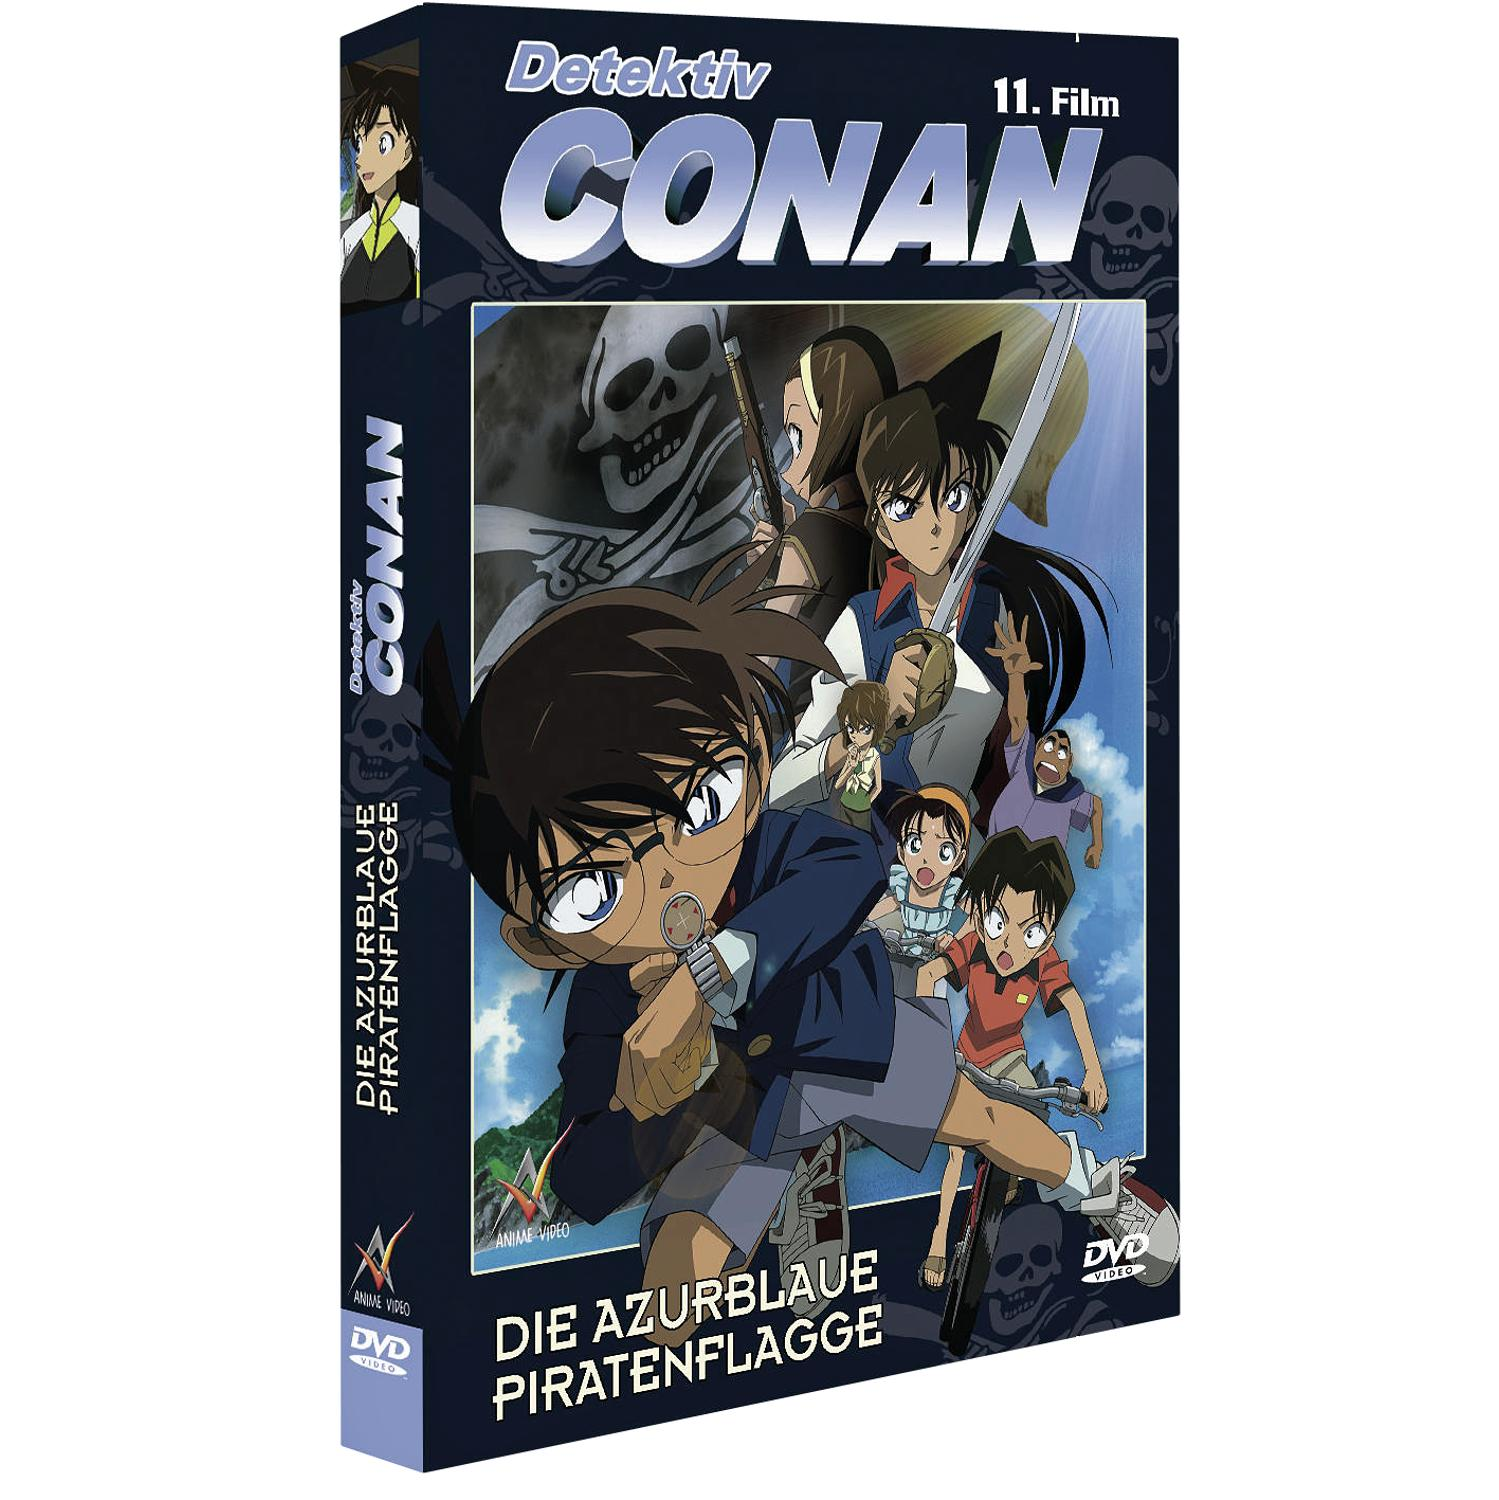 azurblaue DVD Detektiv - Conan Film: Piratenflagge 11. Die